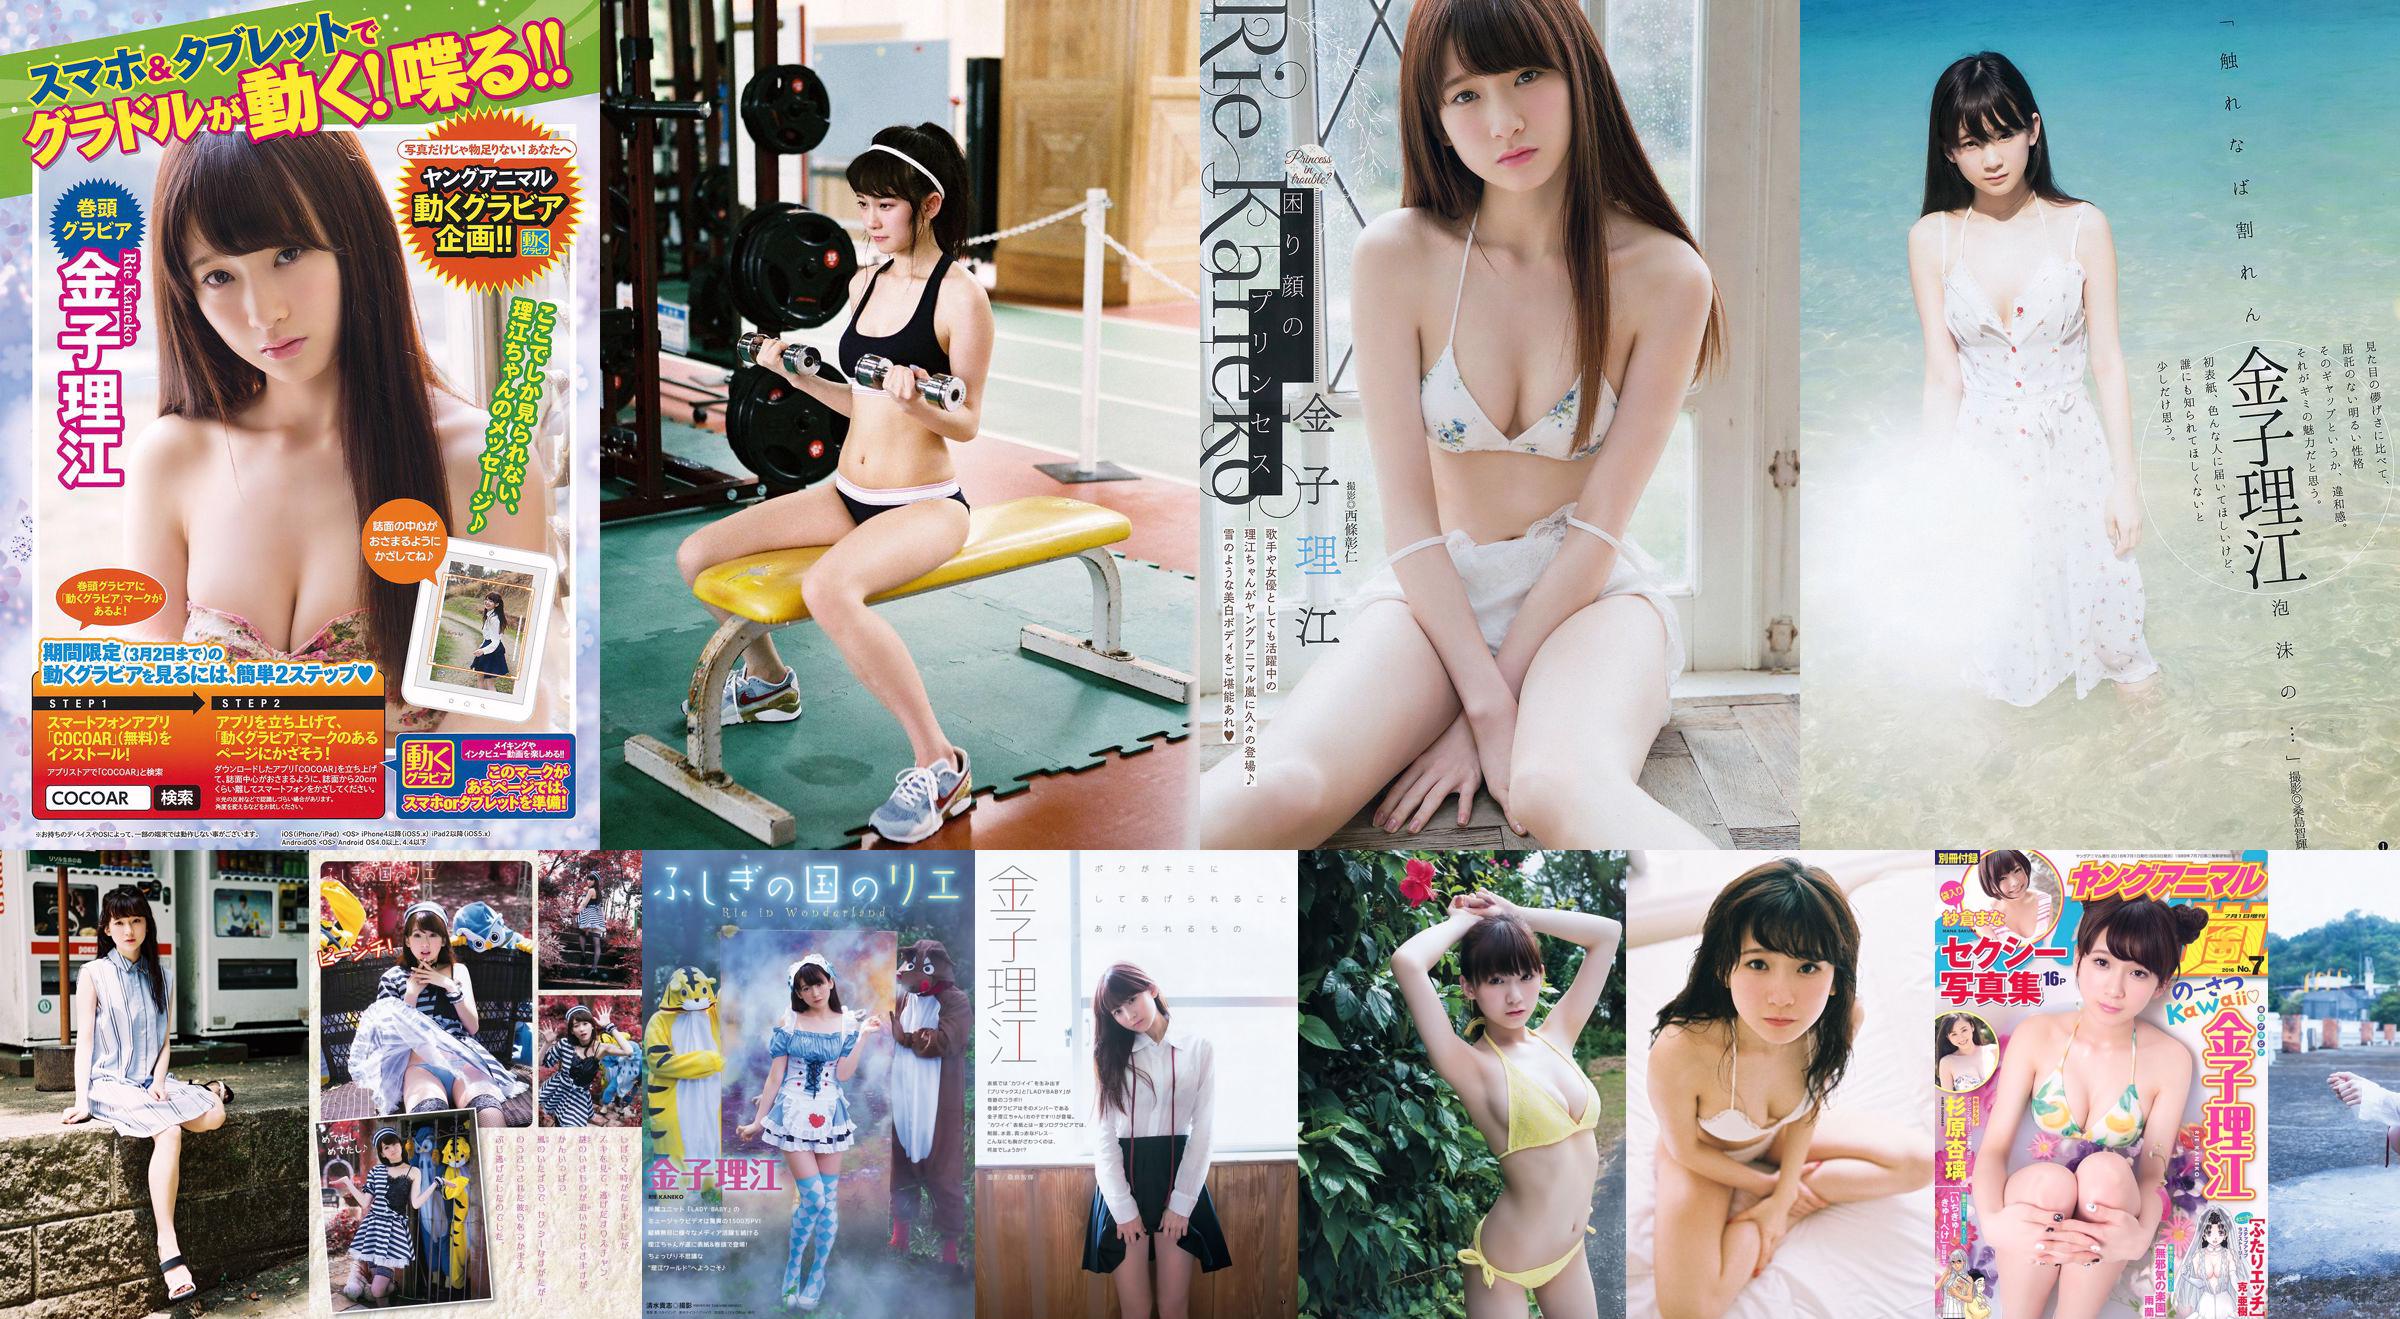 Rie Kaneko, Anri Sugihara, Sakura ま な [Edición especial de animales jóvenes Arashi] No 07 2016 Photo Magazine No.0a95e6 Página 1